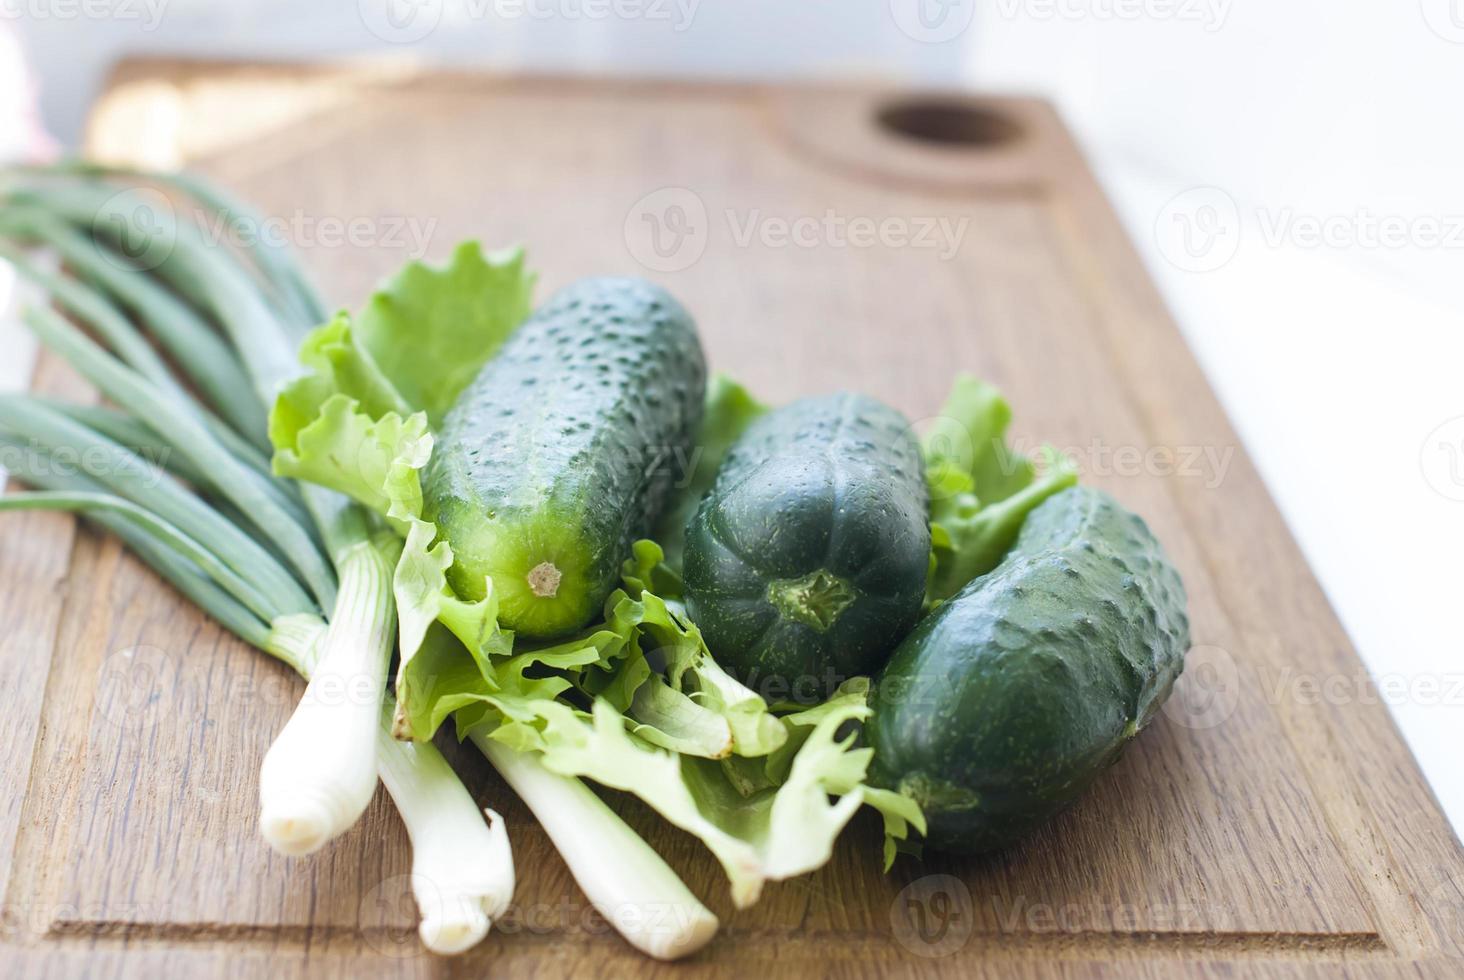 komkommers en groene uien voor salade foto